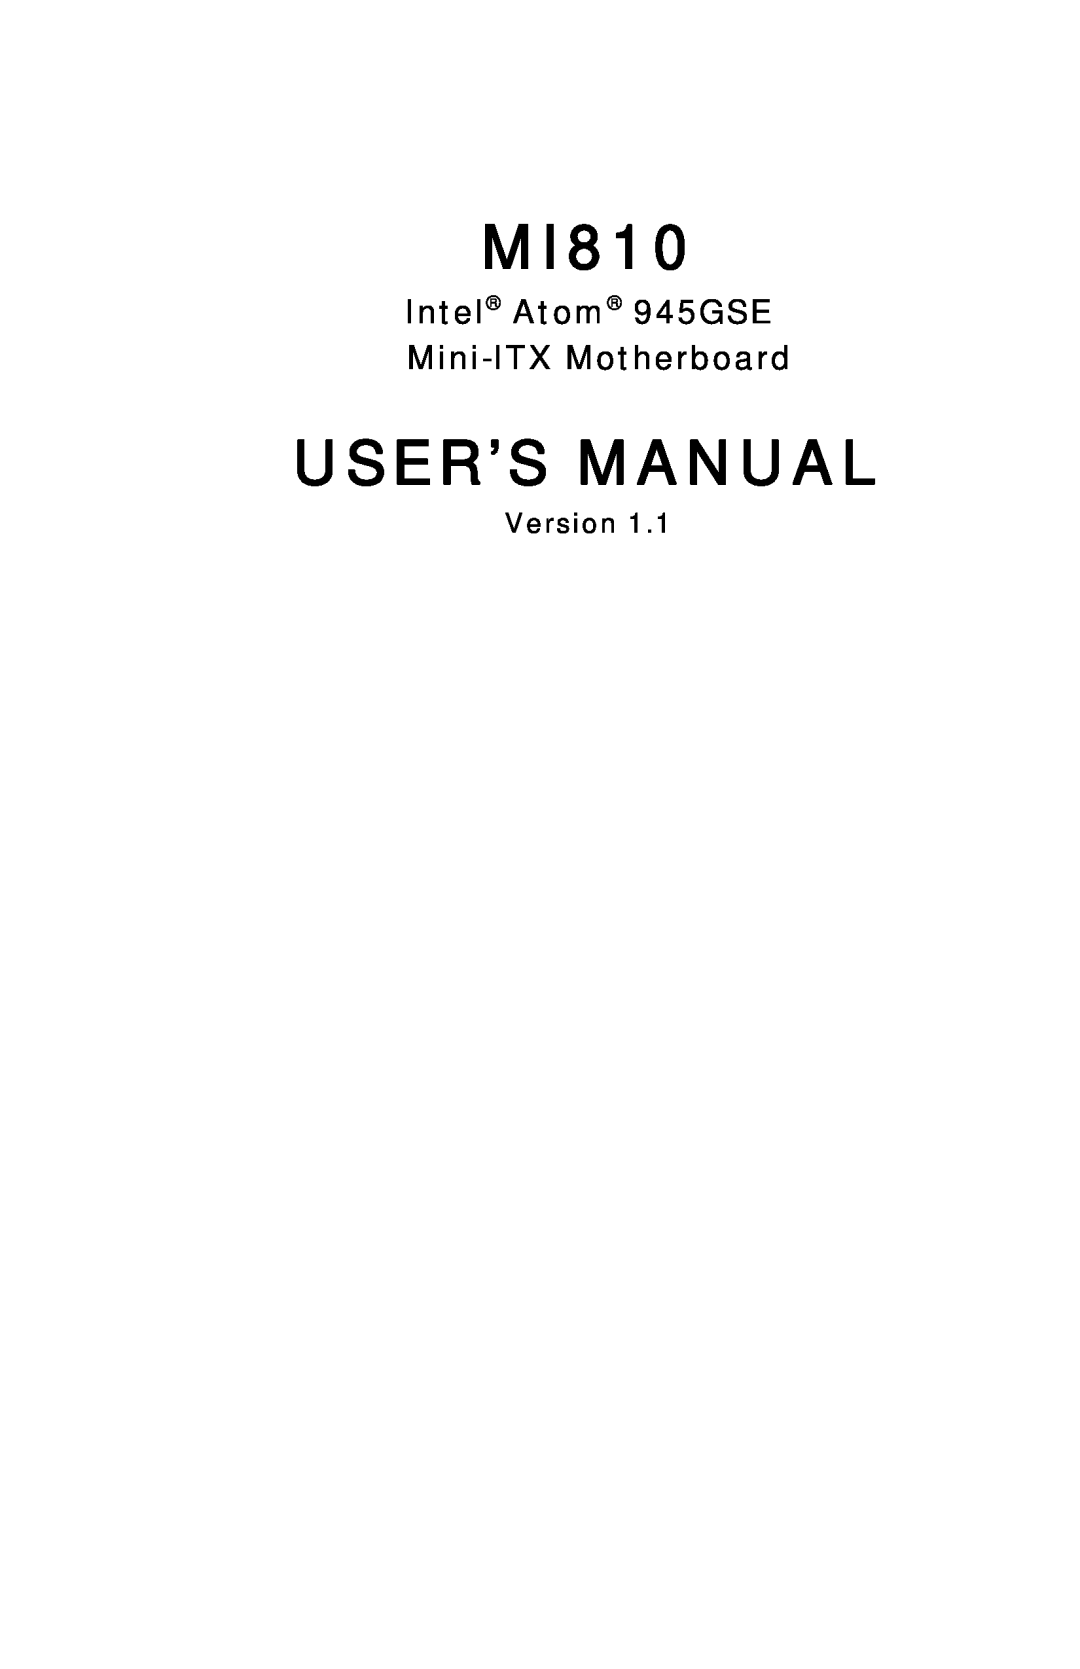 Intel MI810 user manual Intel Atom 945GSE Mini-ITX Motherboard, Version, User’S Manual 